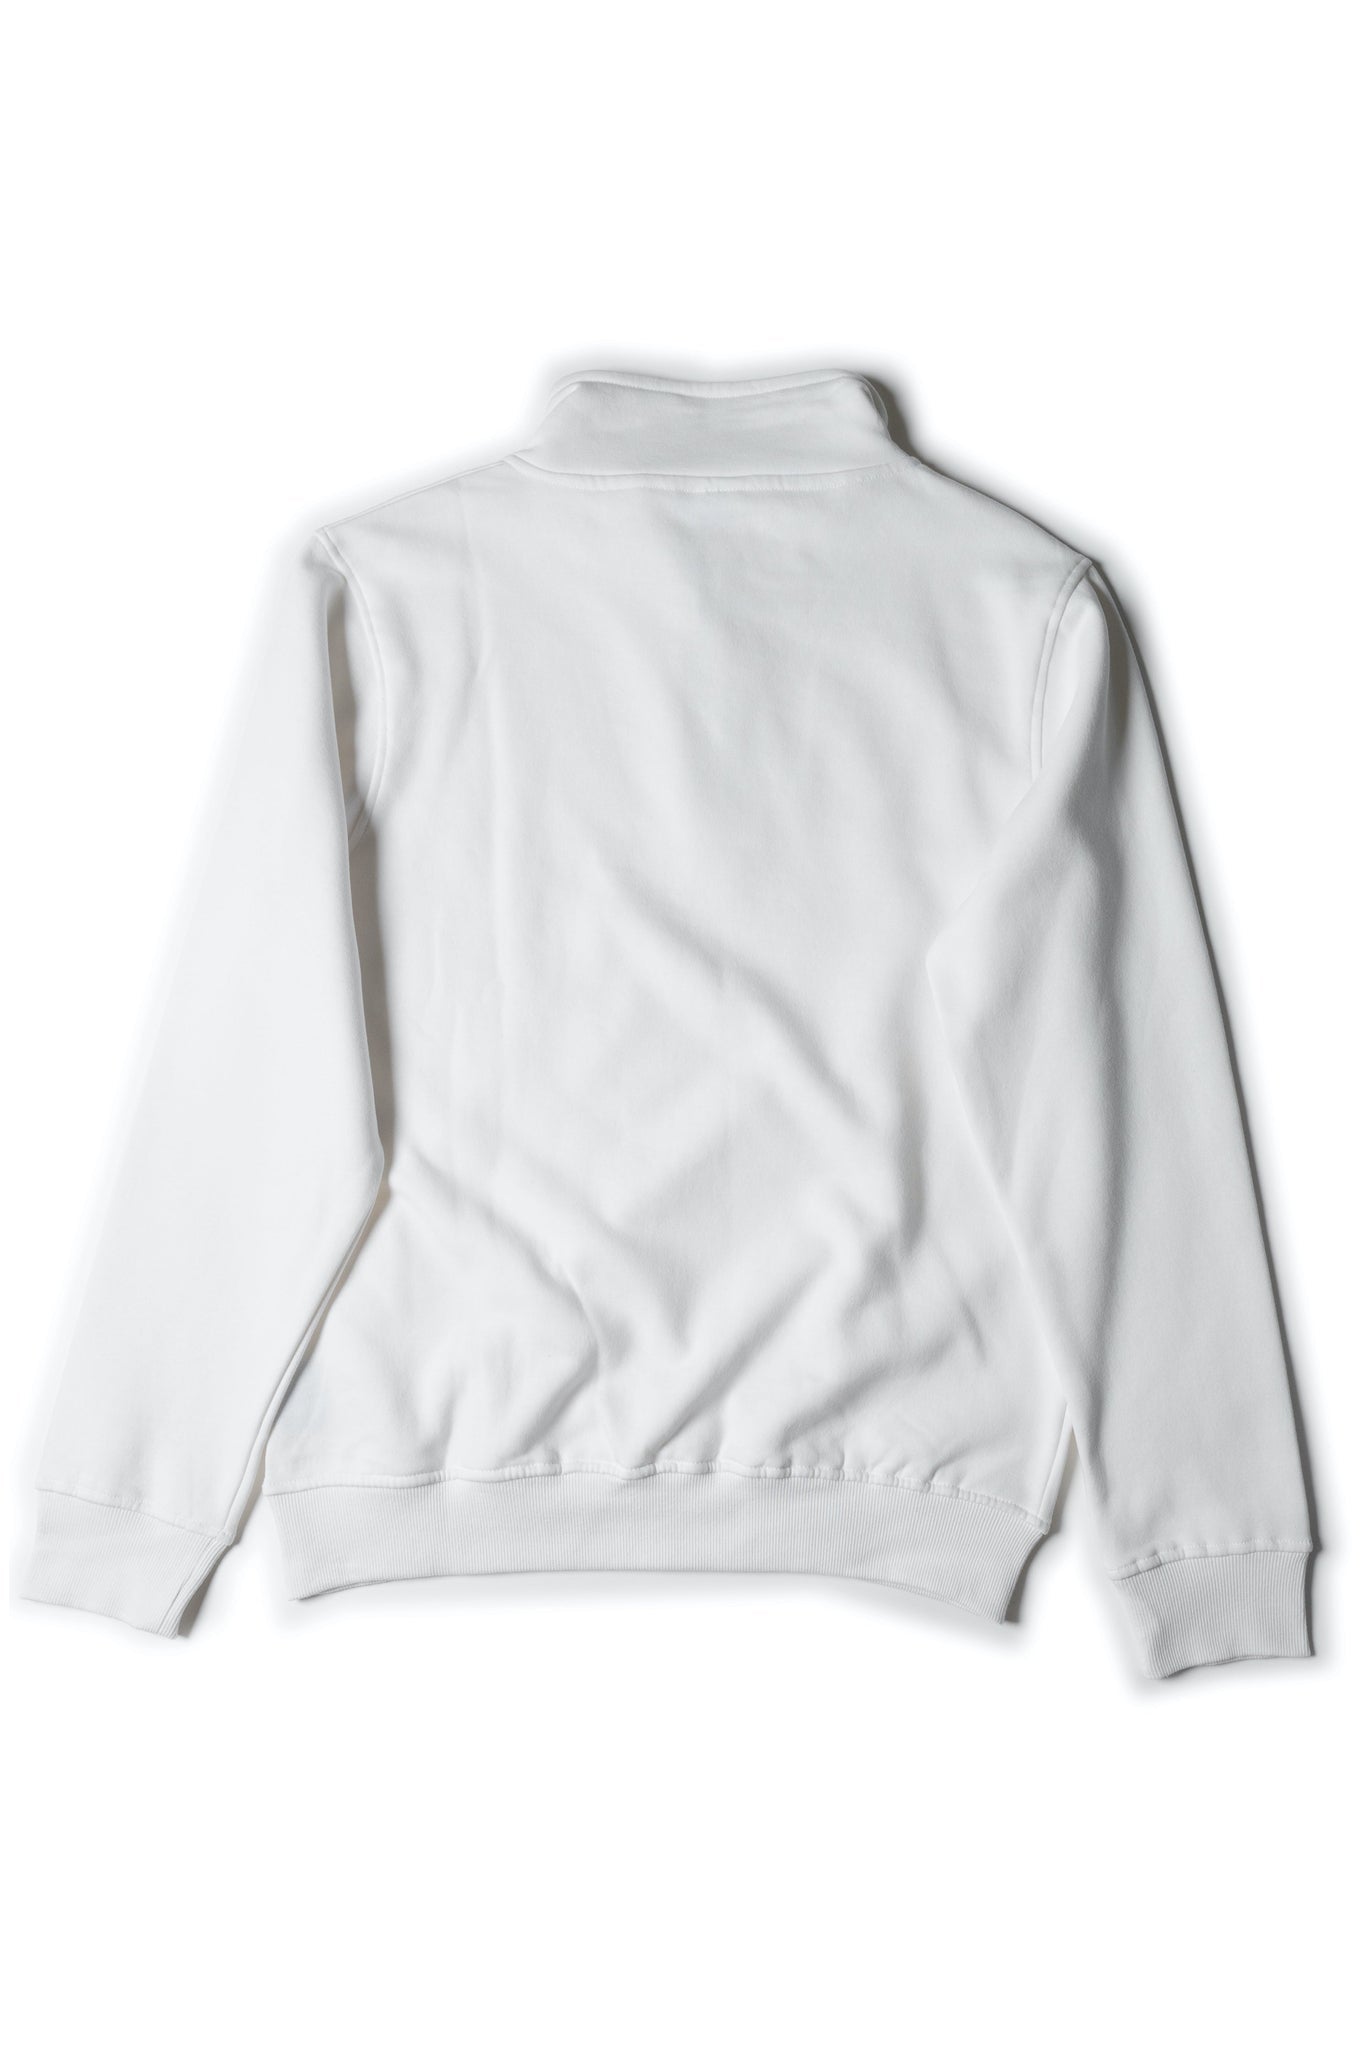 HERO - 4020 Unisex Quarter Zip Sweatshirt - White Quarter